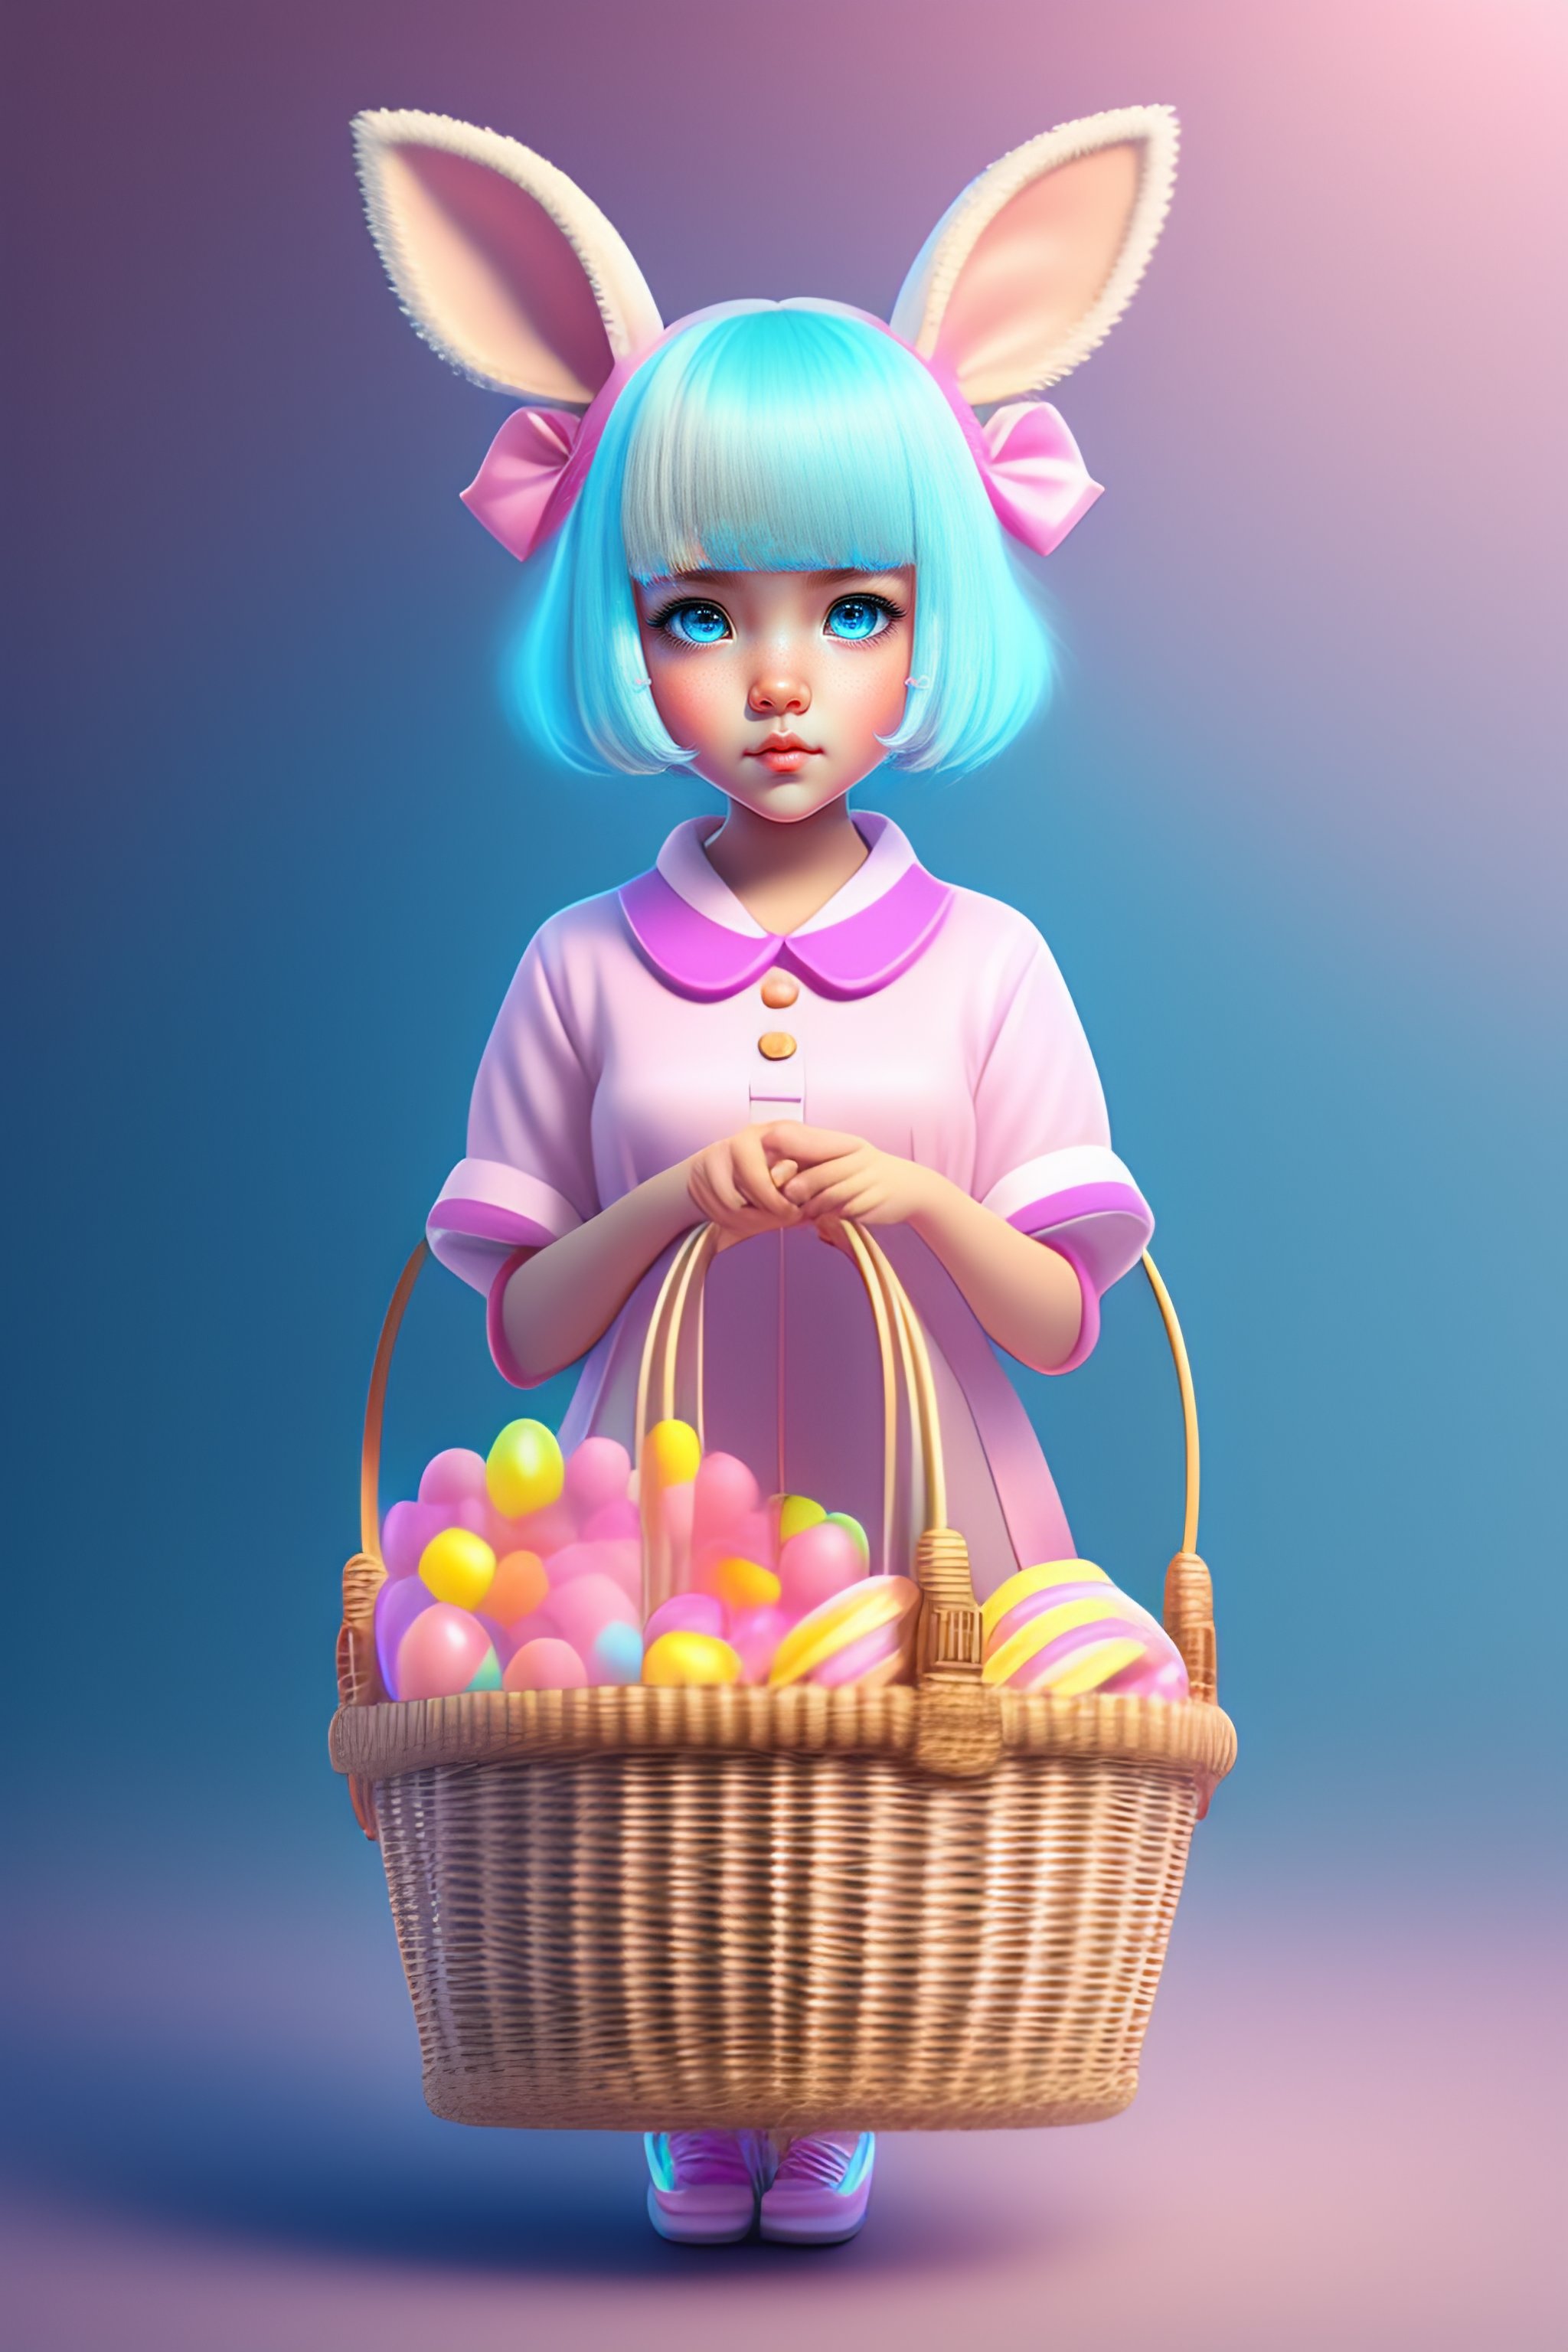 Lexica - Anime,wallpaper like pencil drawing, digital art of cute kawaii  girl with bunny ears, light blue hair,bob,pink eyes,holding a  Omikuji,backgr